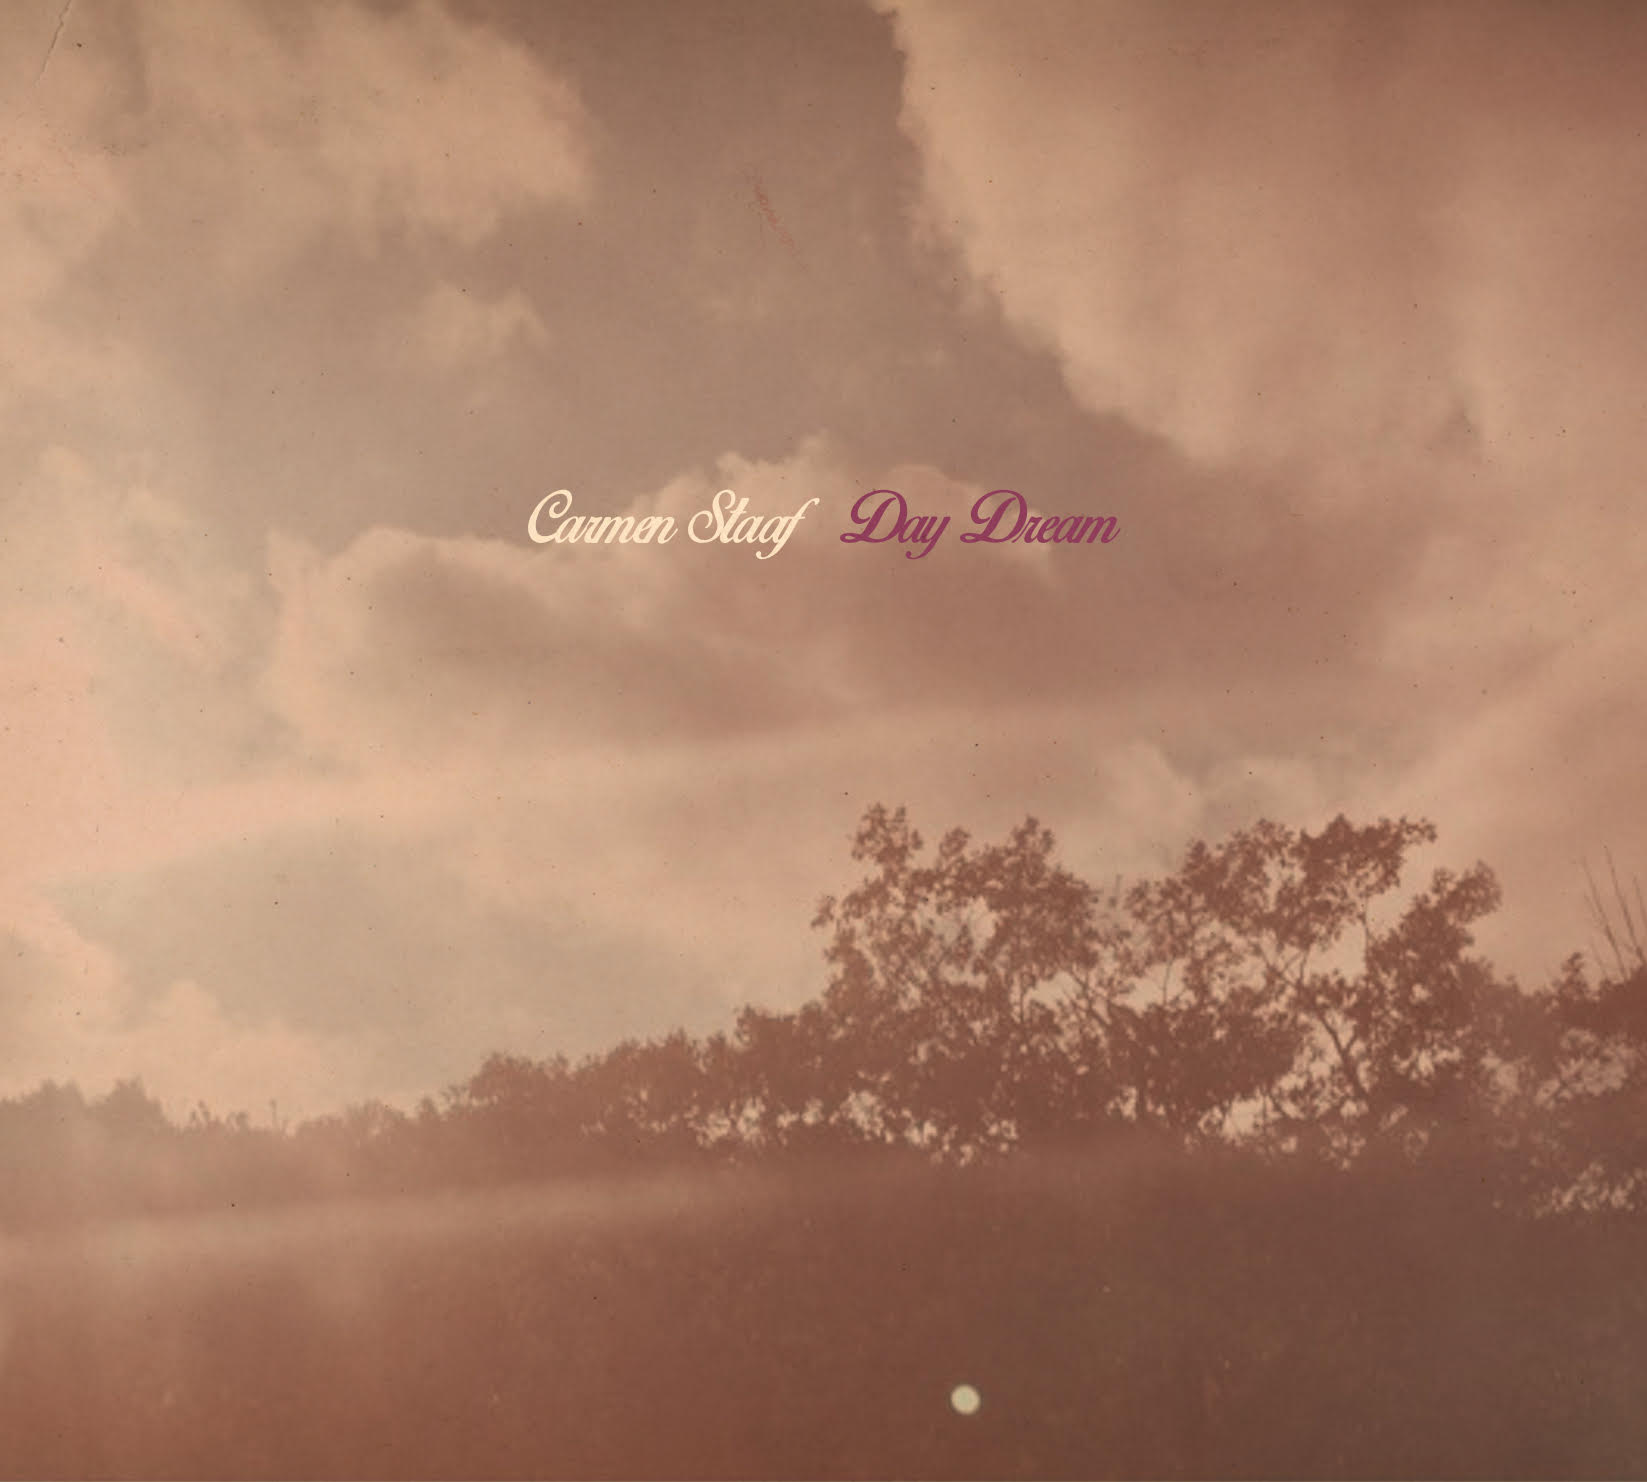 Carmen Staaf Day Dream cover.jpg